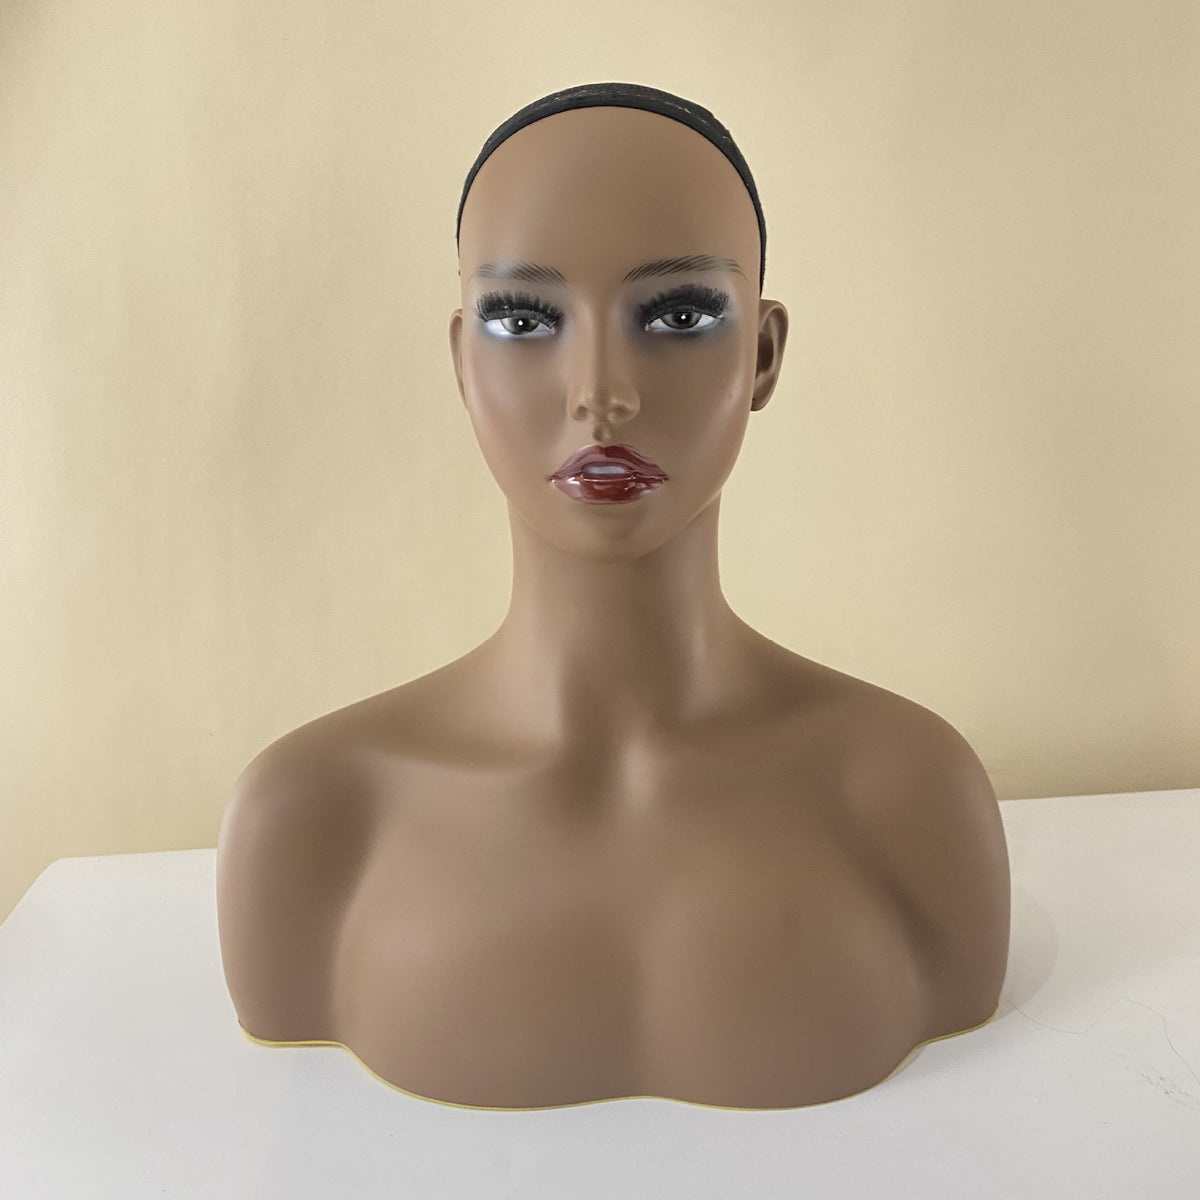 Mannequin Head Wig Jewelry Display Black